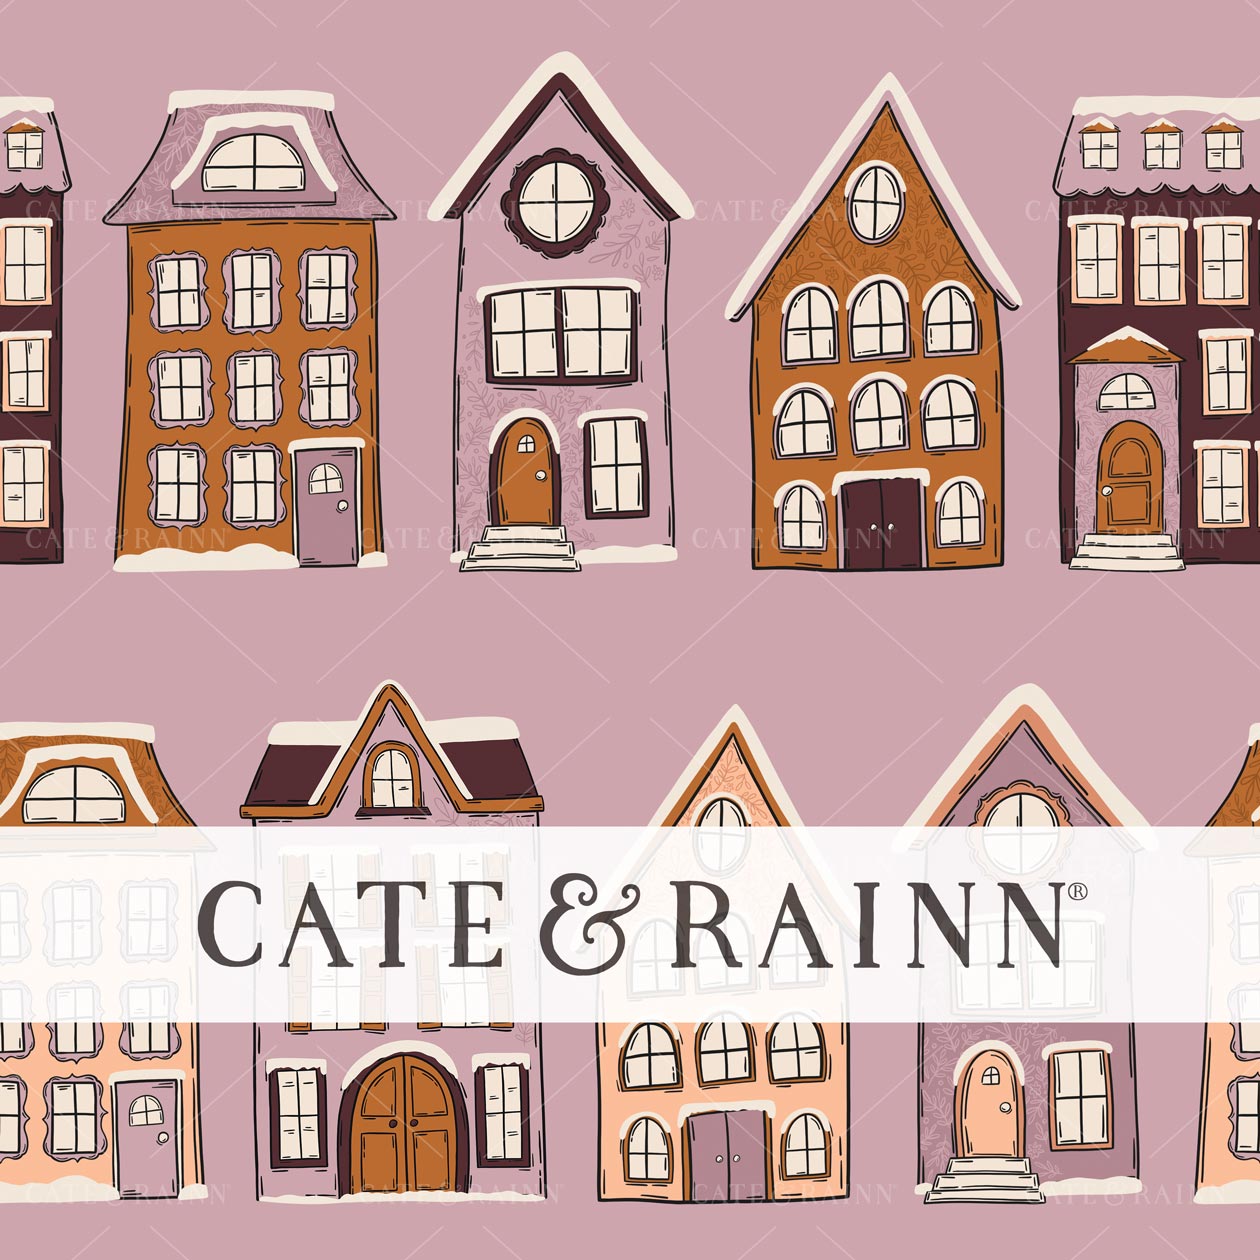 Whimsical Winter Village Houses Seamless Pattern Design by Cate & Rainn